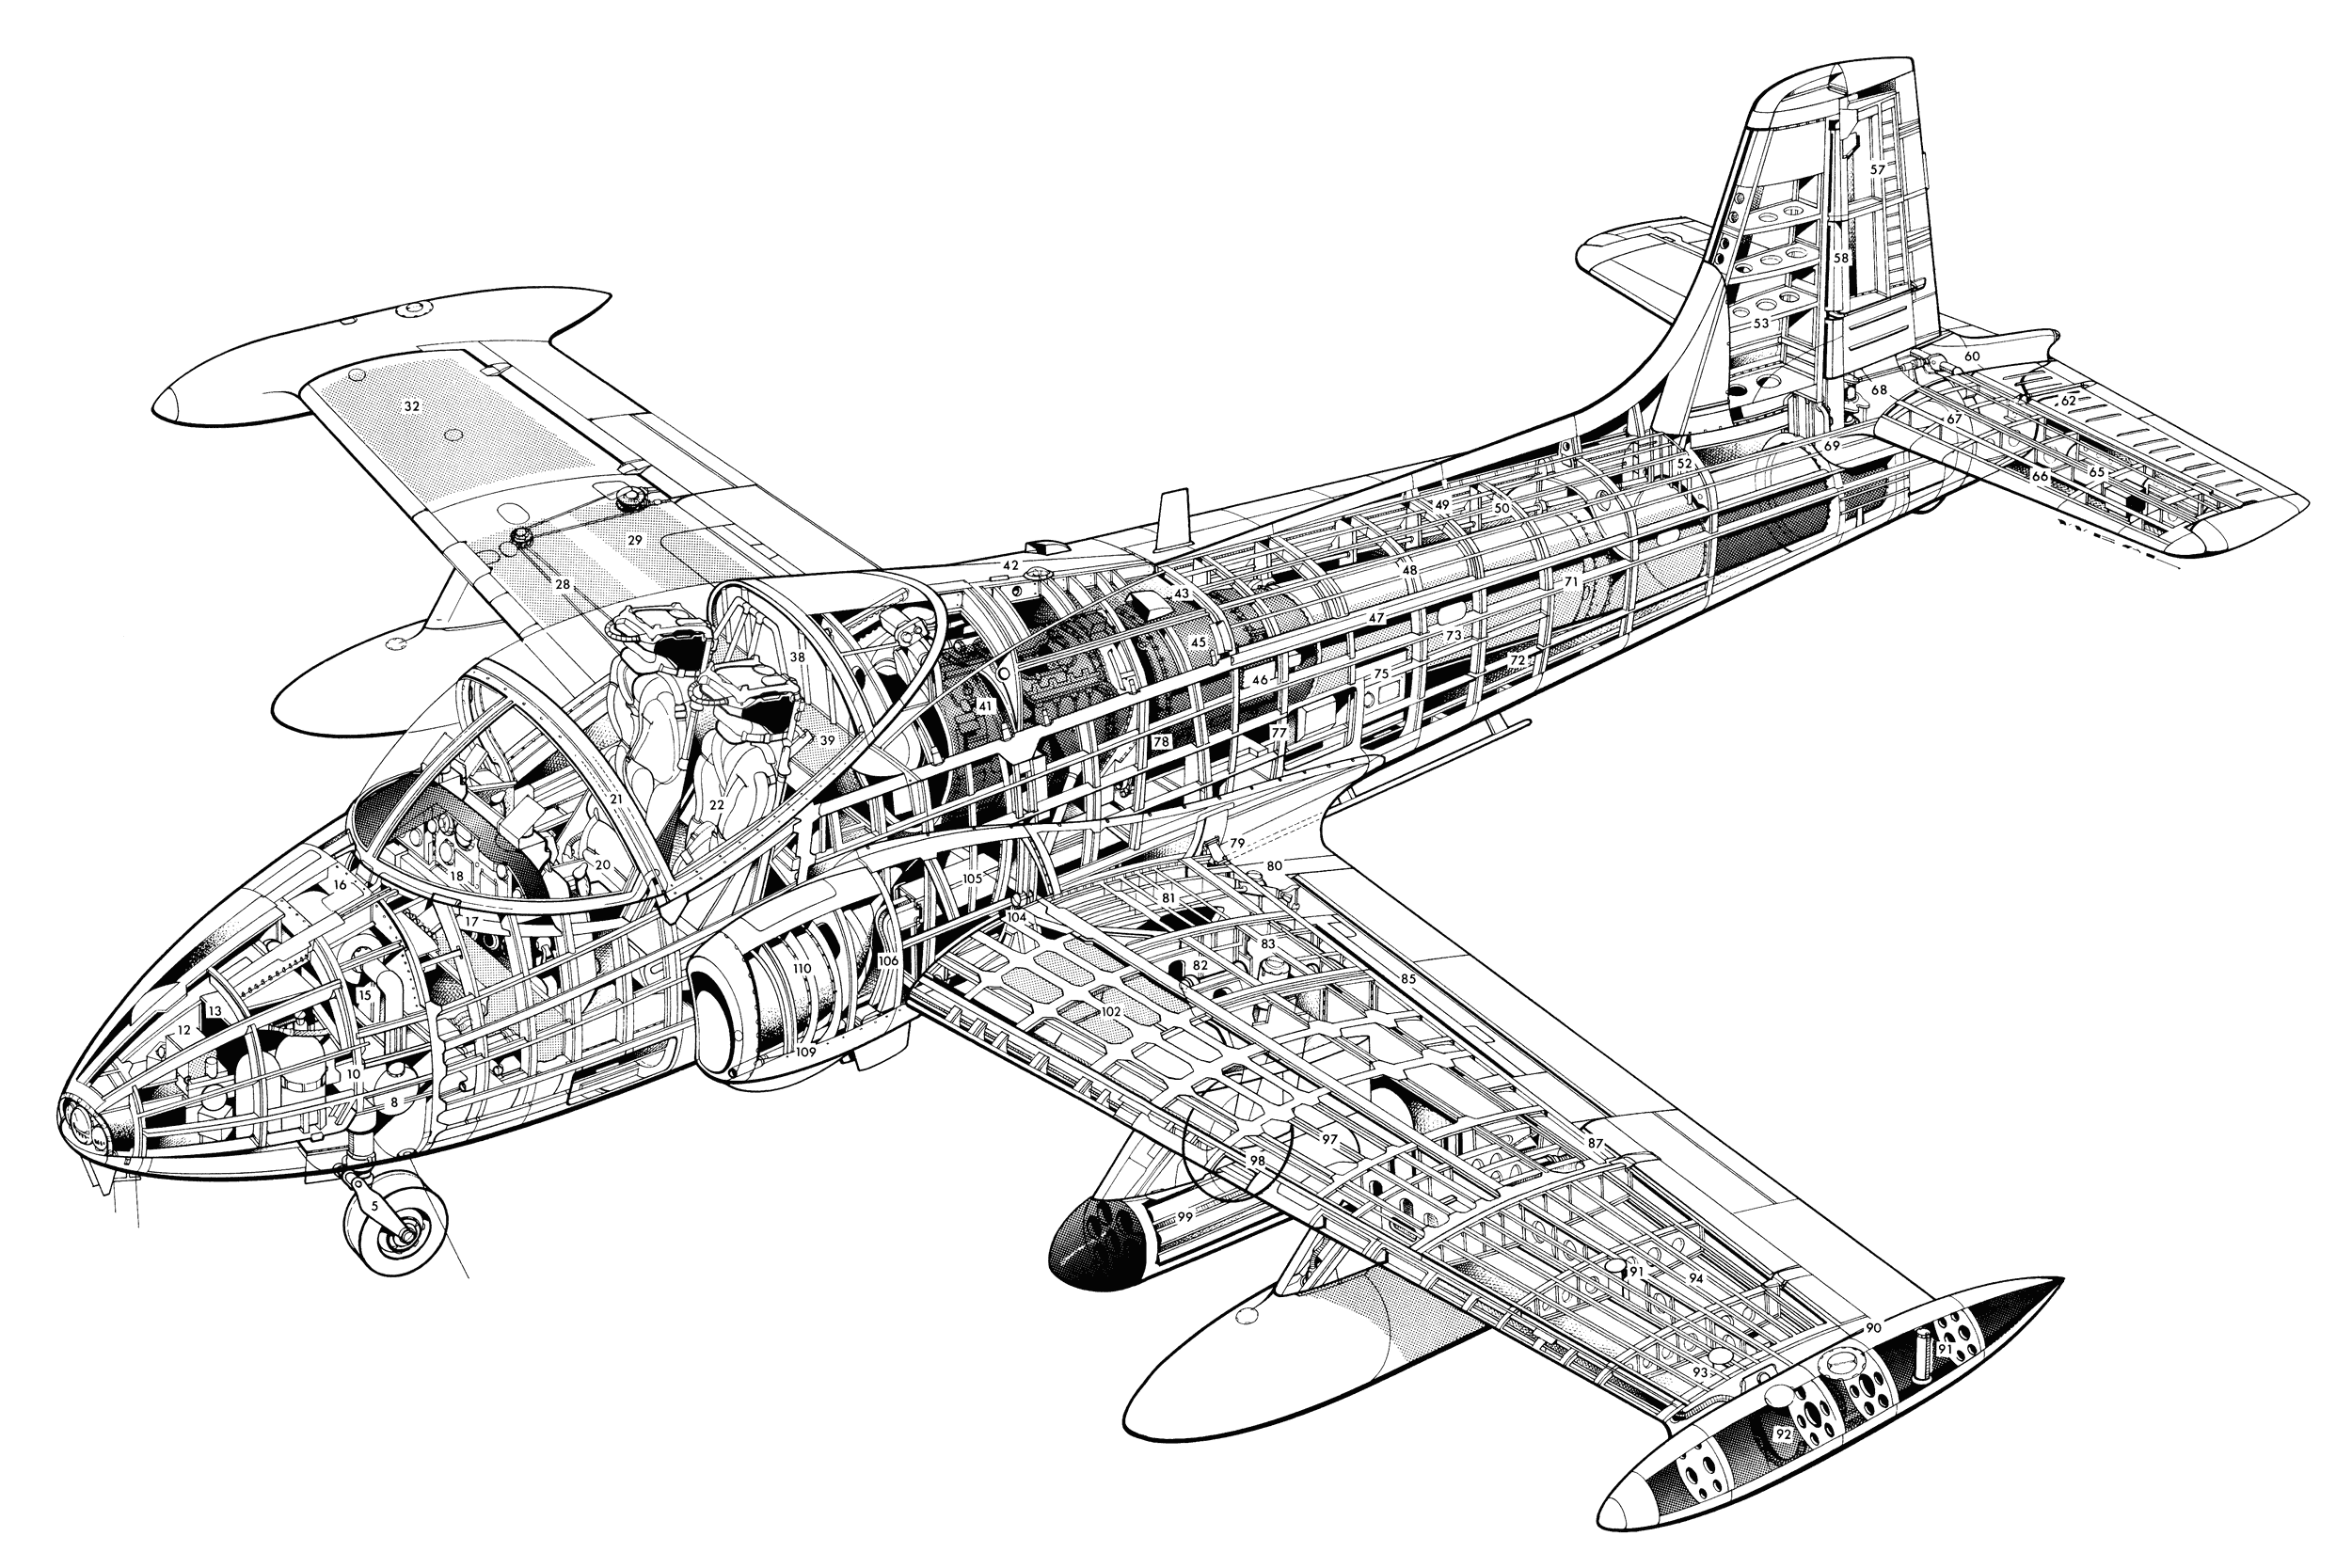 BAC Strikemaster cutaway